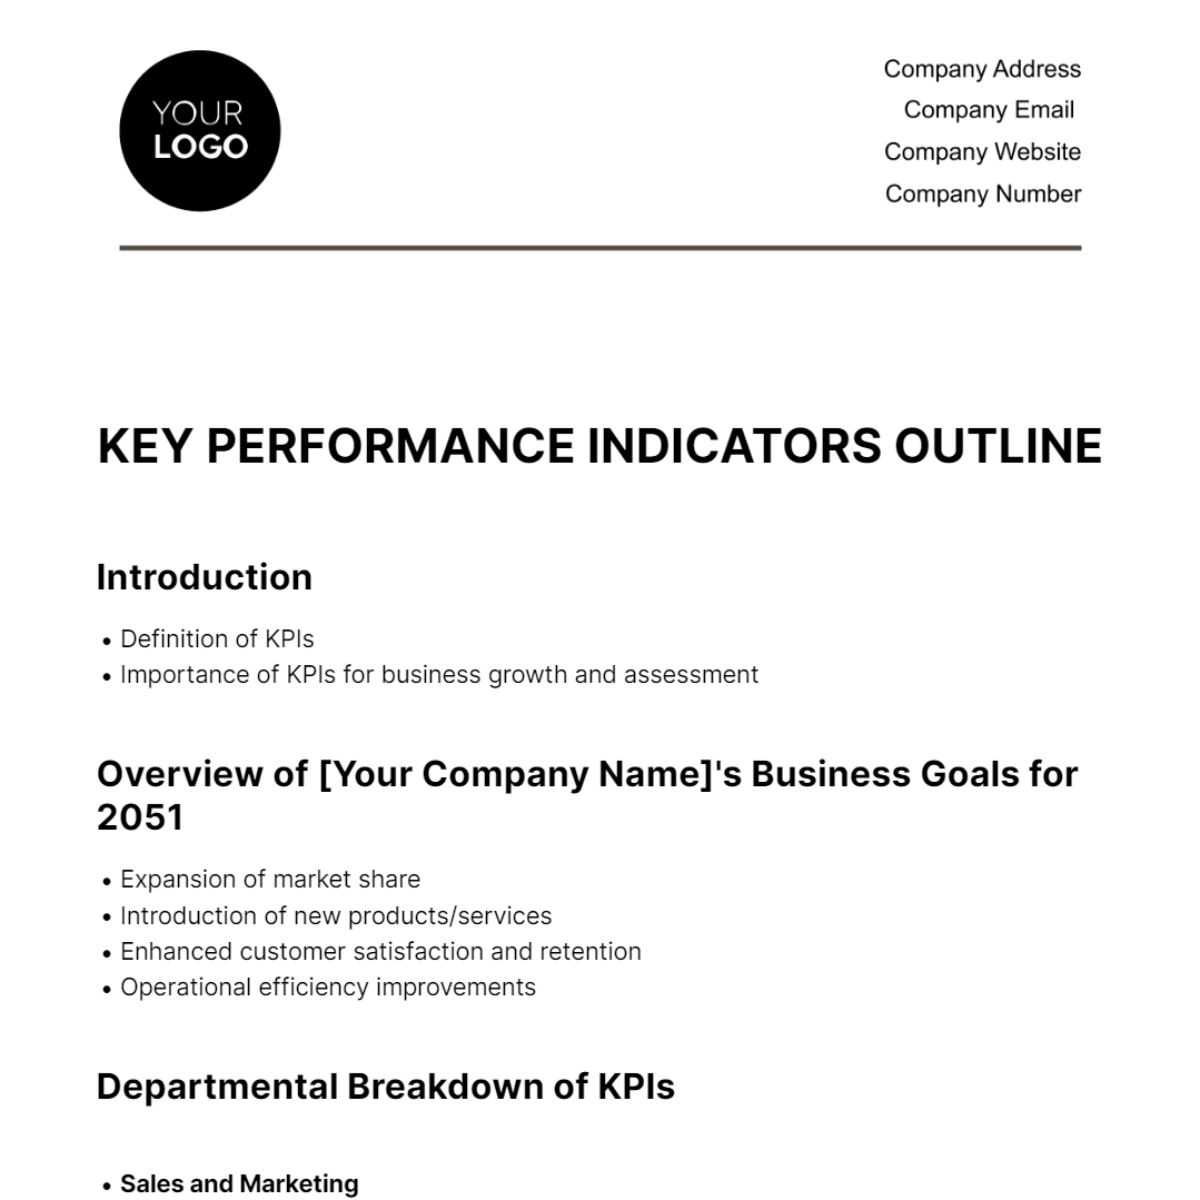 Key Performance Indicators Outline HR Template